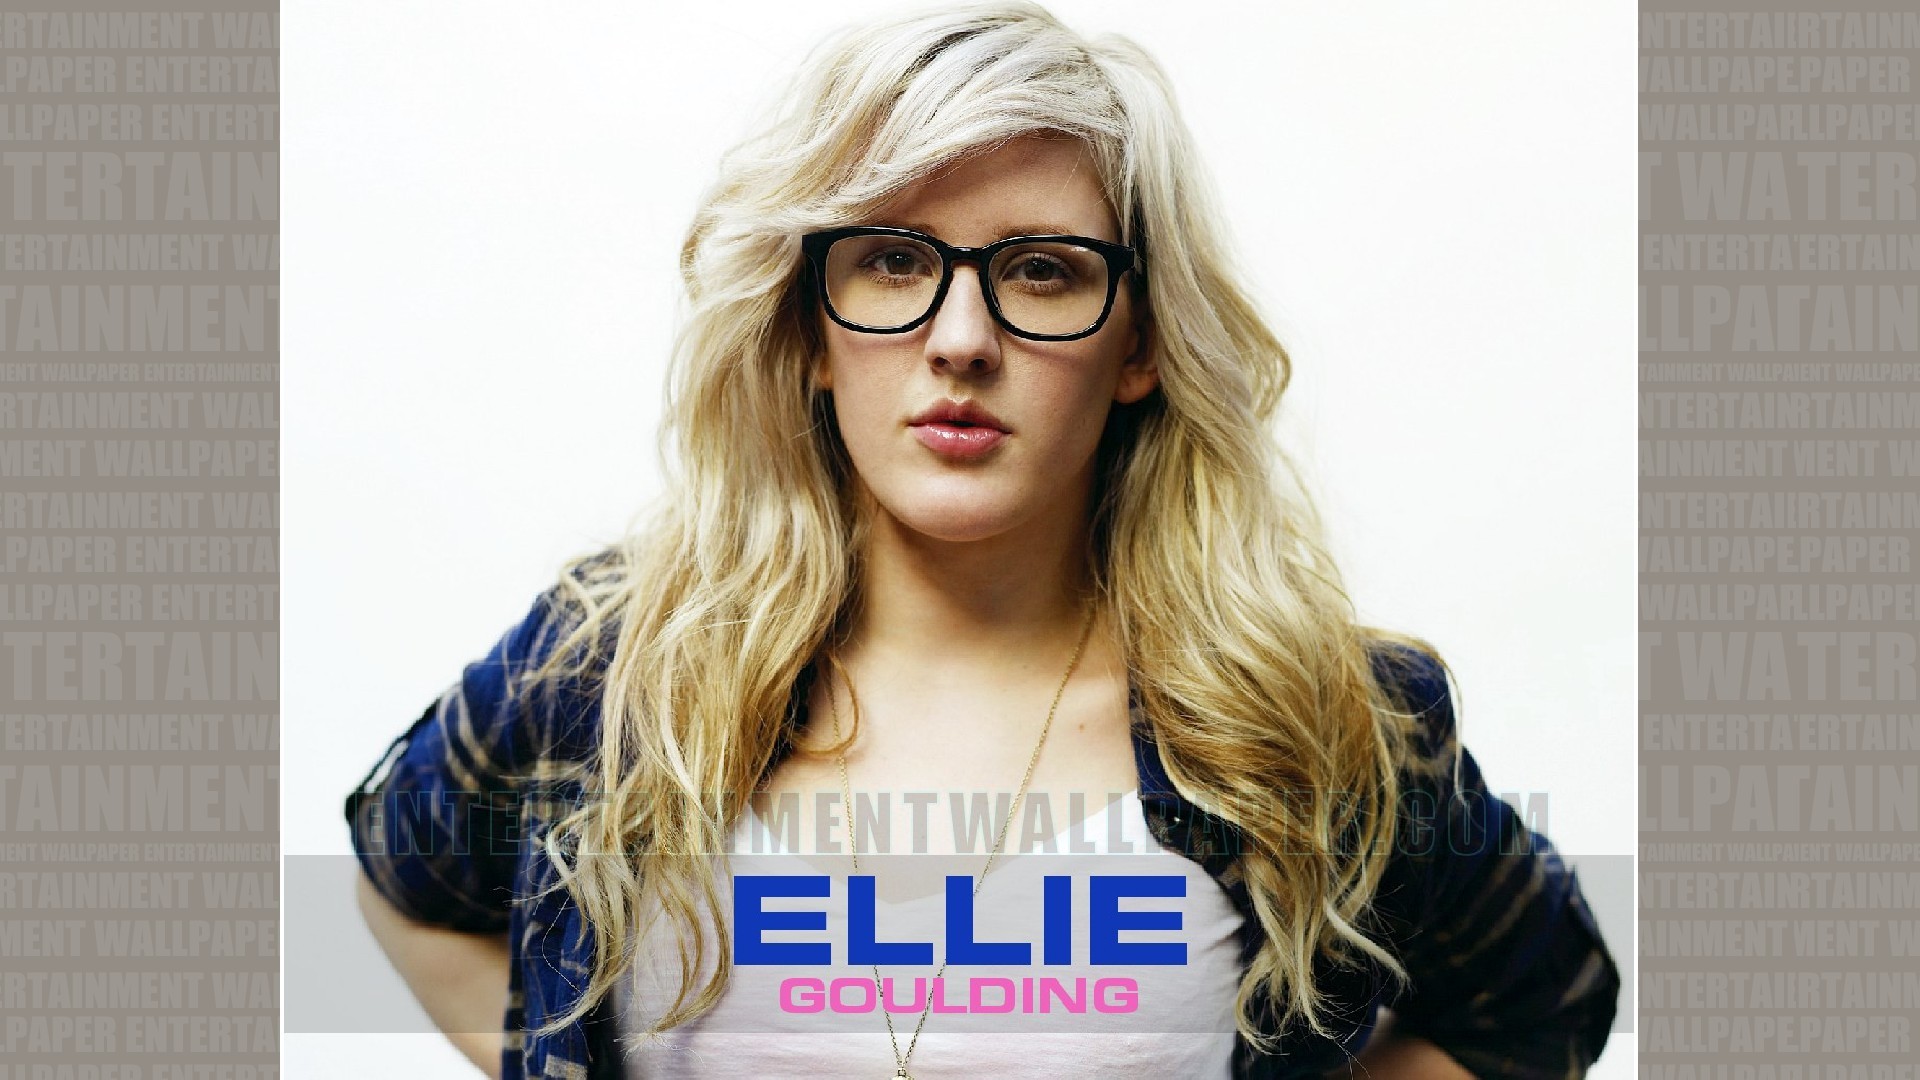 Ellie Goulding Wallpaper – Original size, download now.